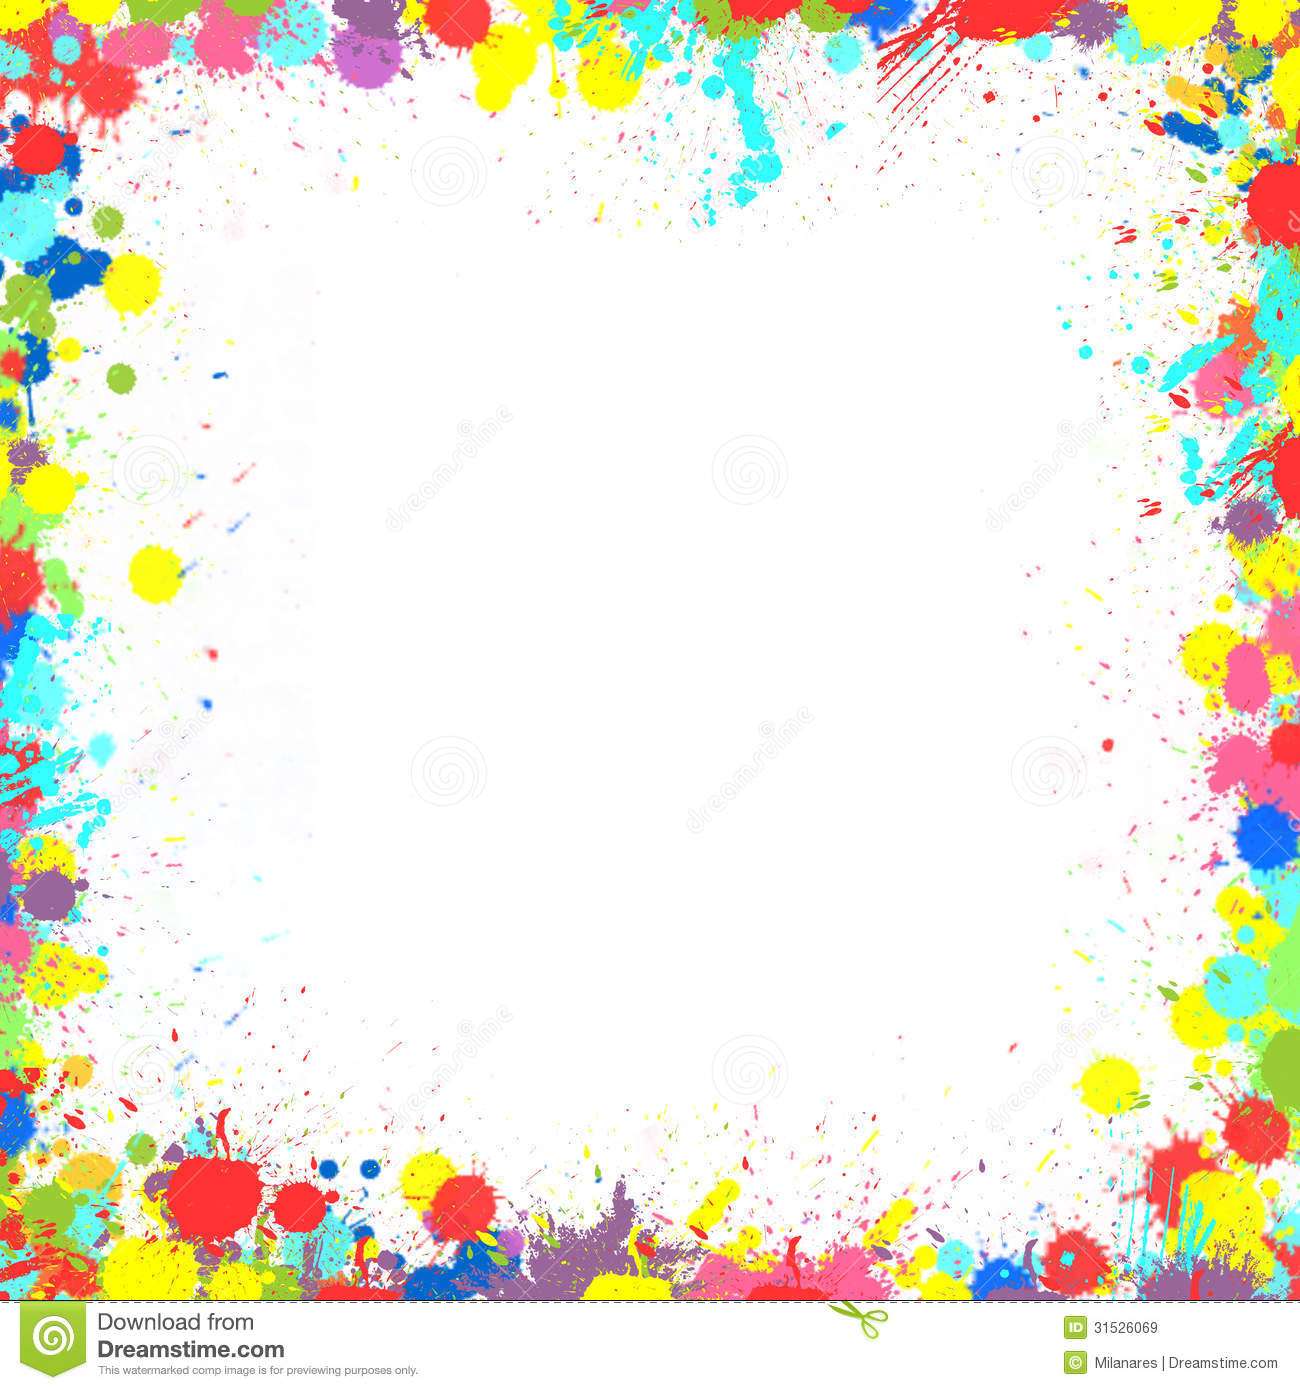 Colorful Inky Splash Frame Border Royalty Free Stock Images   Image